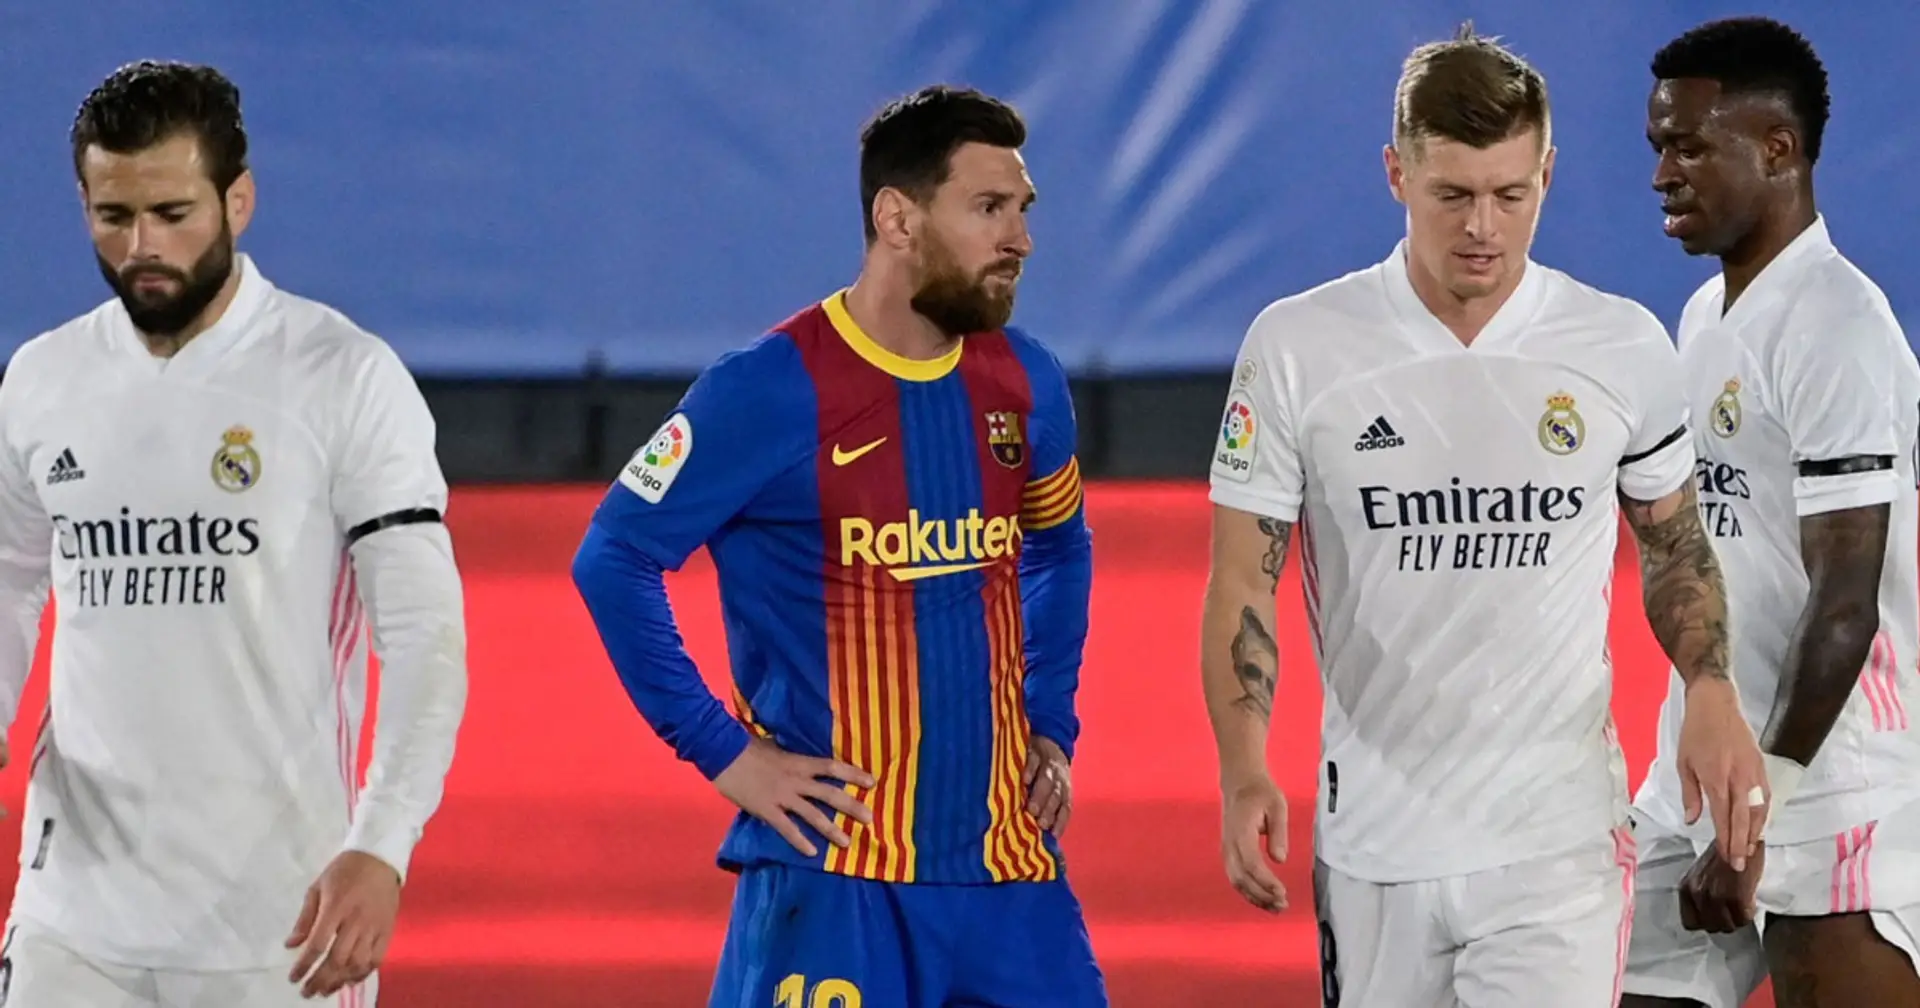 VIDEO HIGHLIGHTS: Rating Barca performance vs Real Madrid 📹 